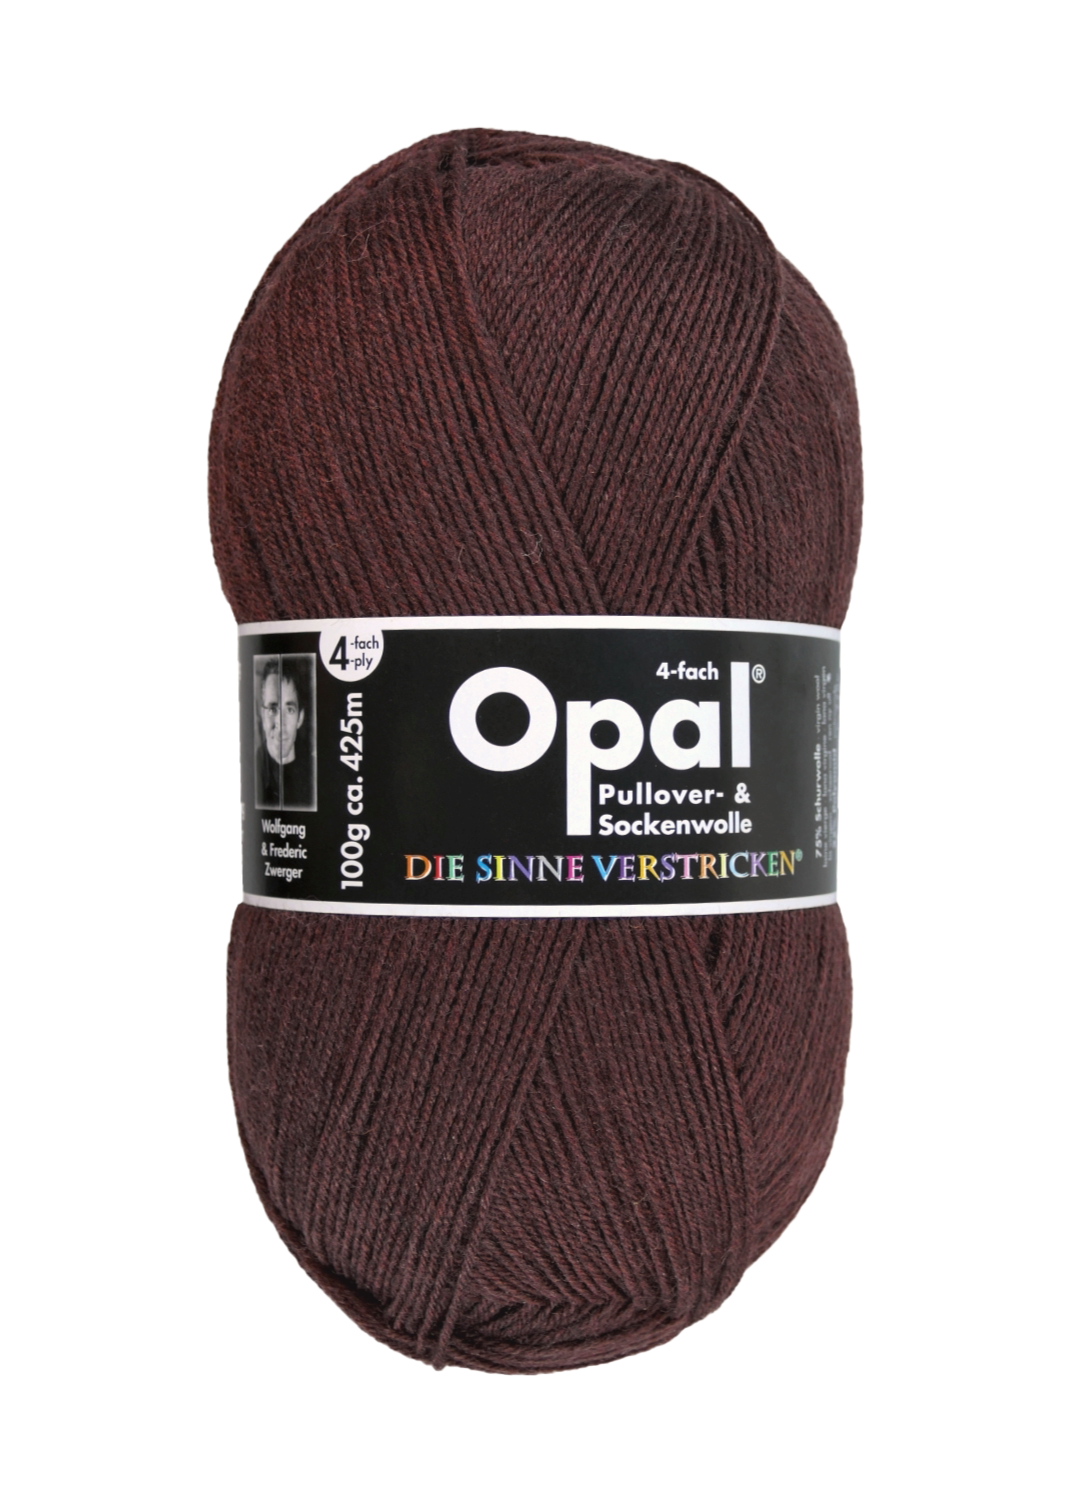 OPAL uni - 4-fach Sockenwolle 5192 - dunkelbraun